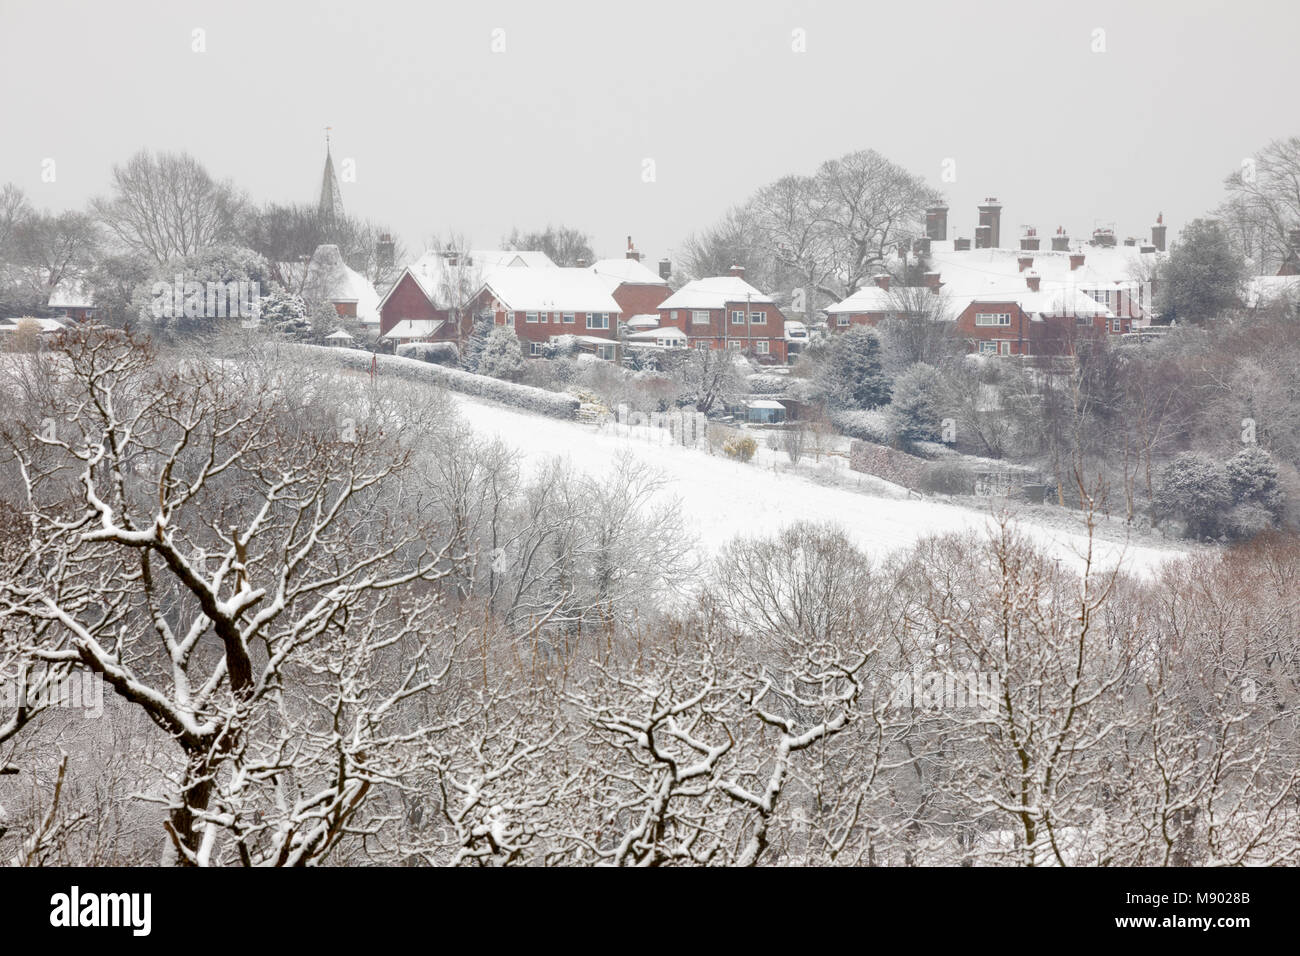 Village of Burwash in snow, Burwash, High Weald AONB, East Sussex, England, United Kingdom, Europe Stock Photo